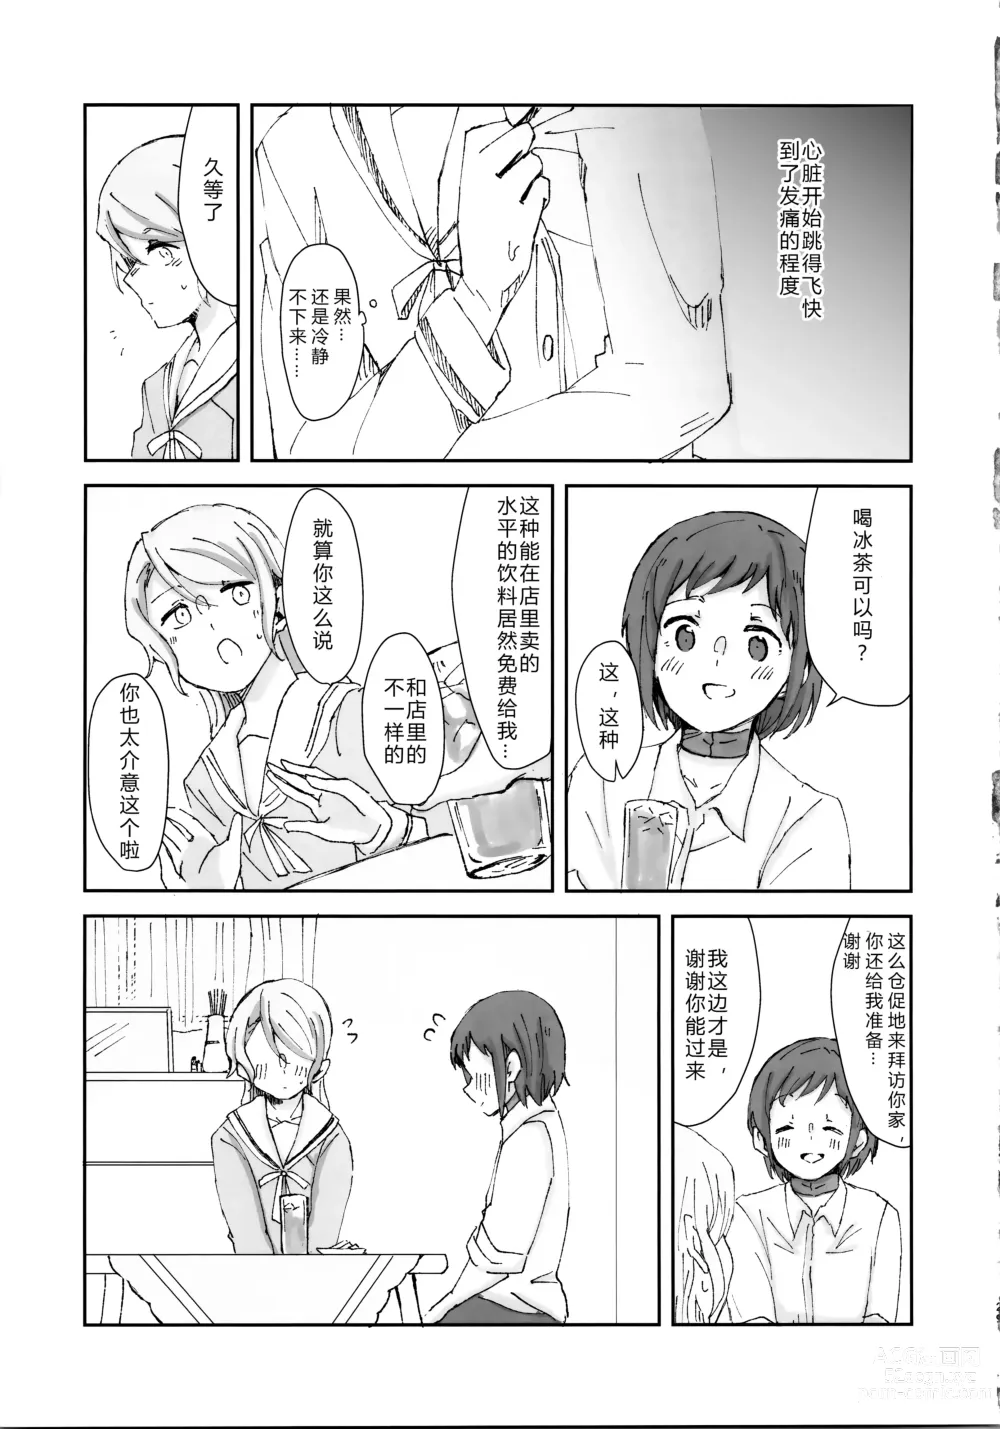 Page 29 of doujinshi 只要爱着彼此就好